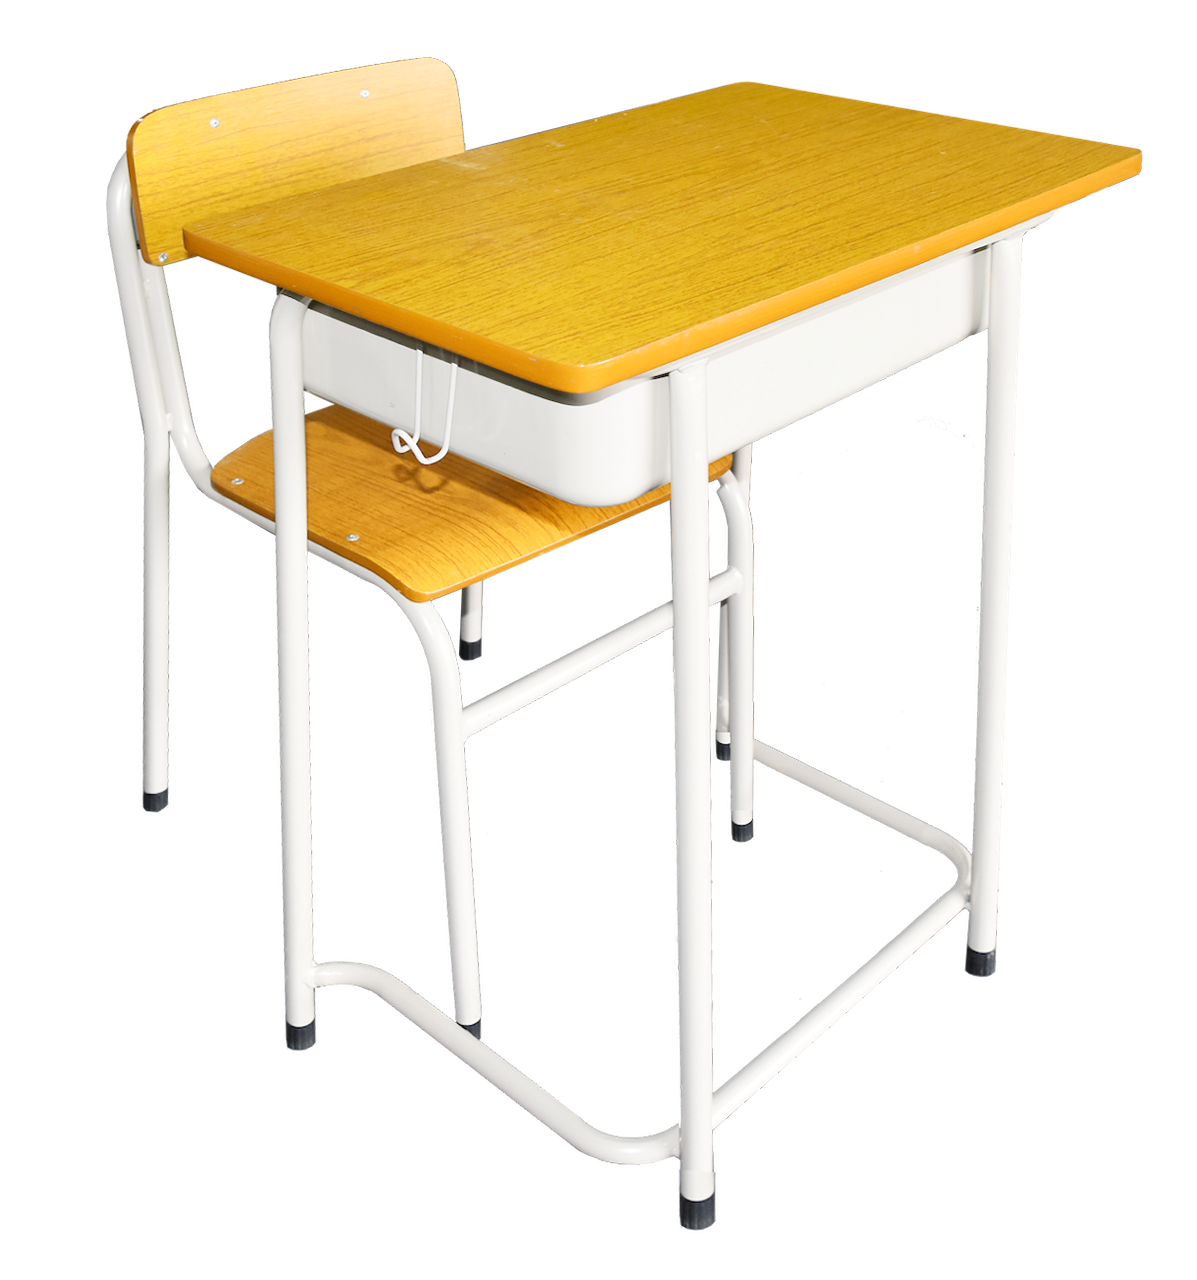 Dark school desk and chair copy